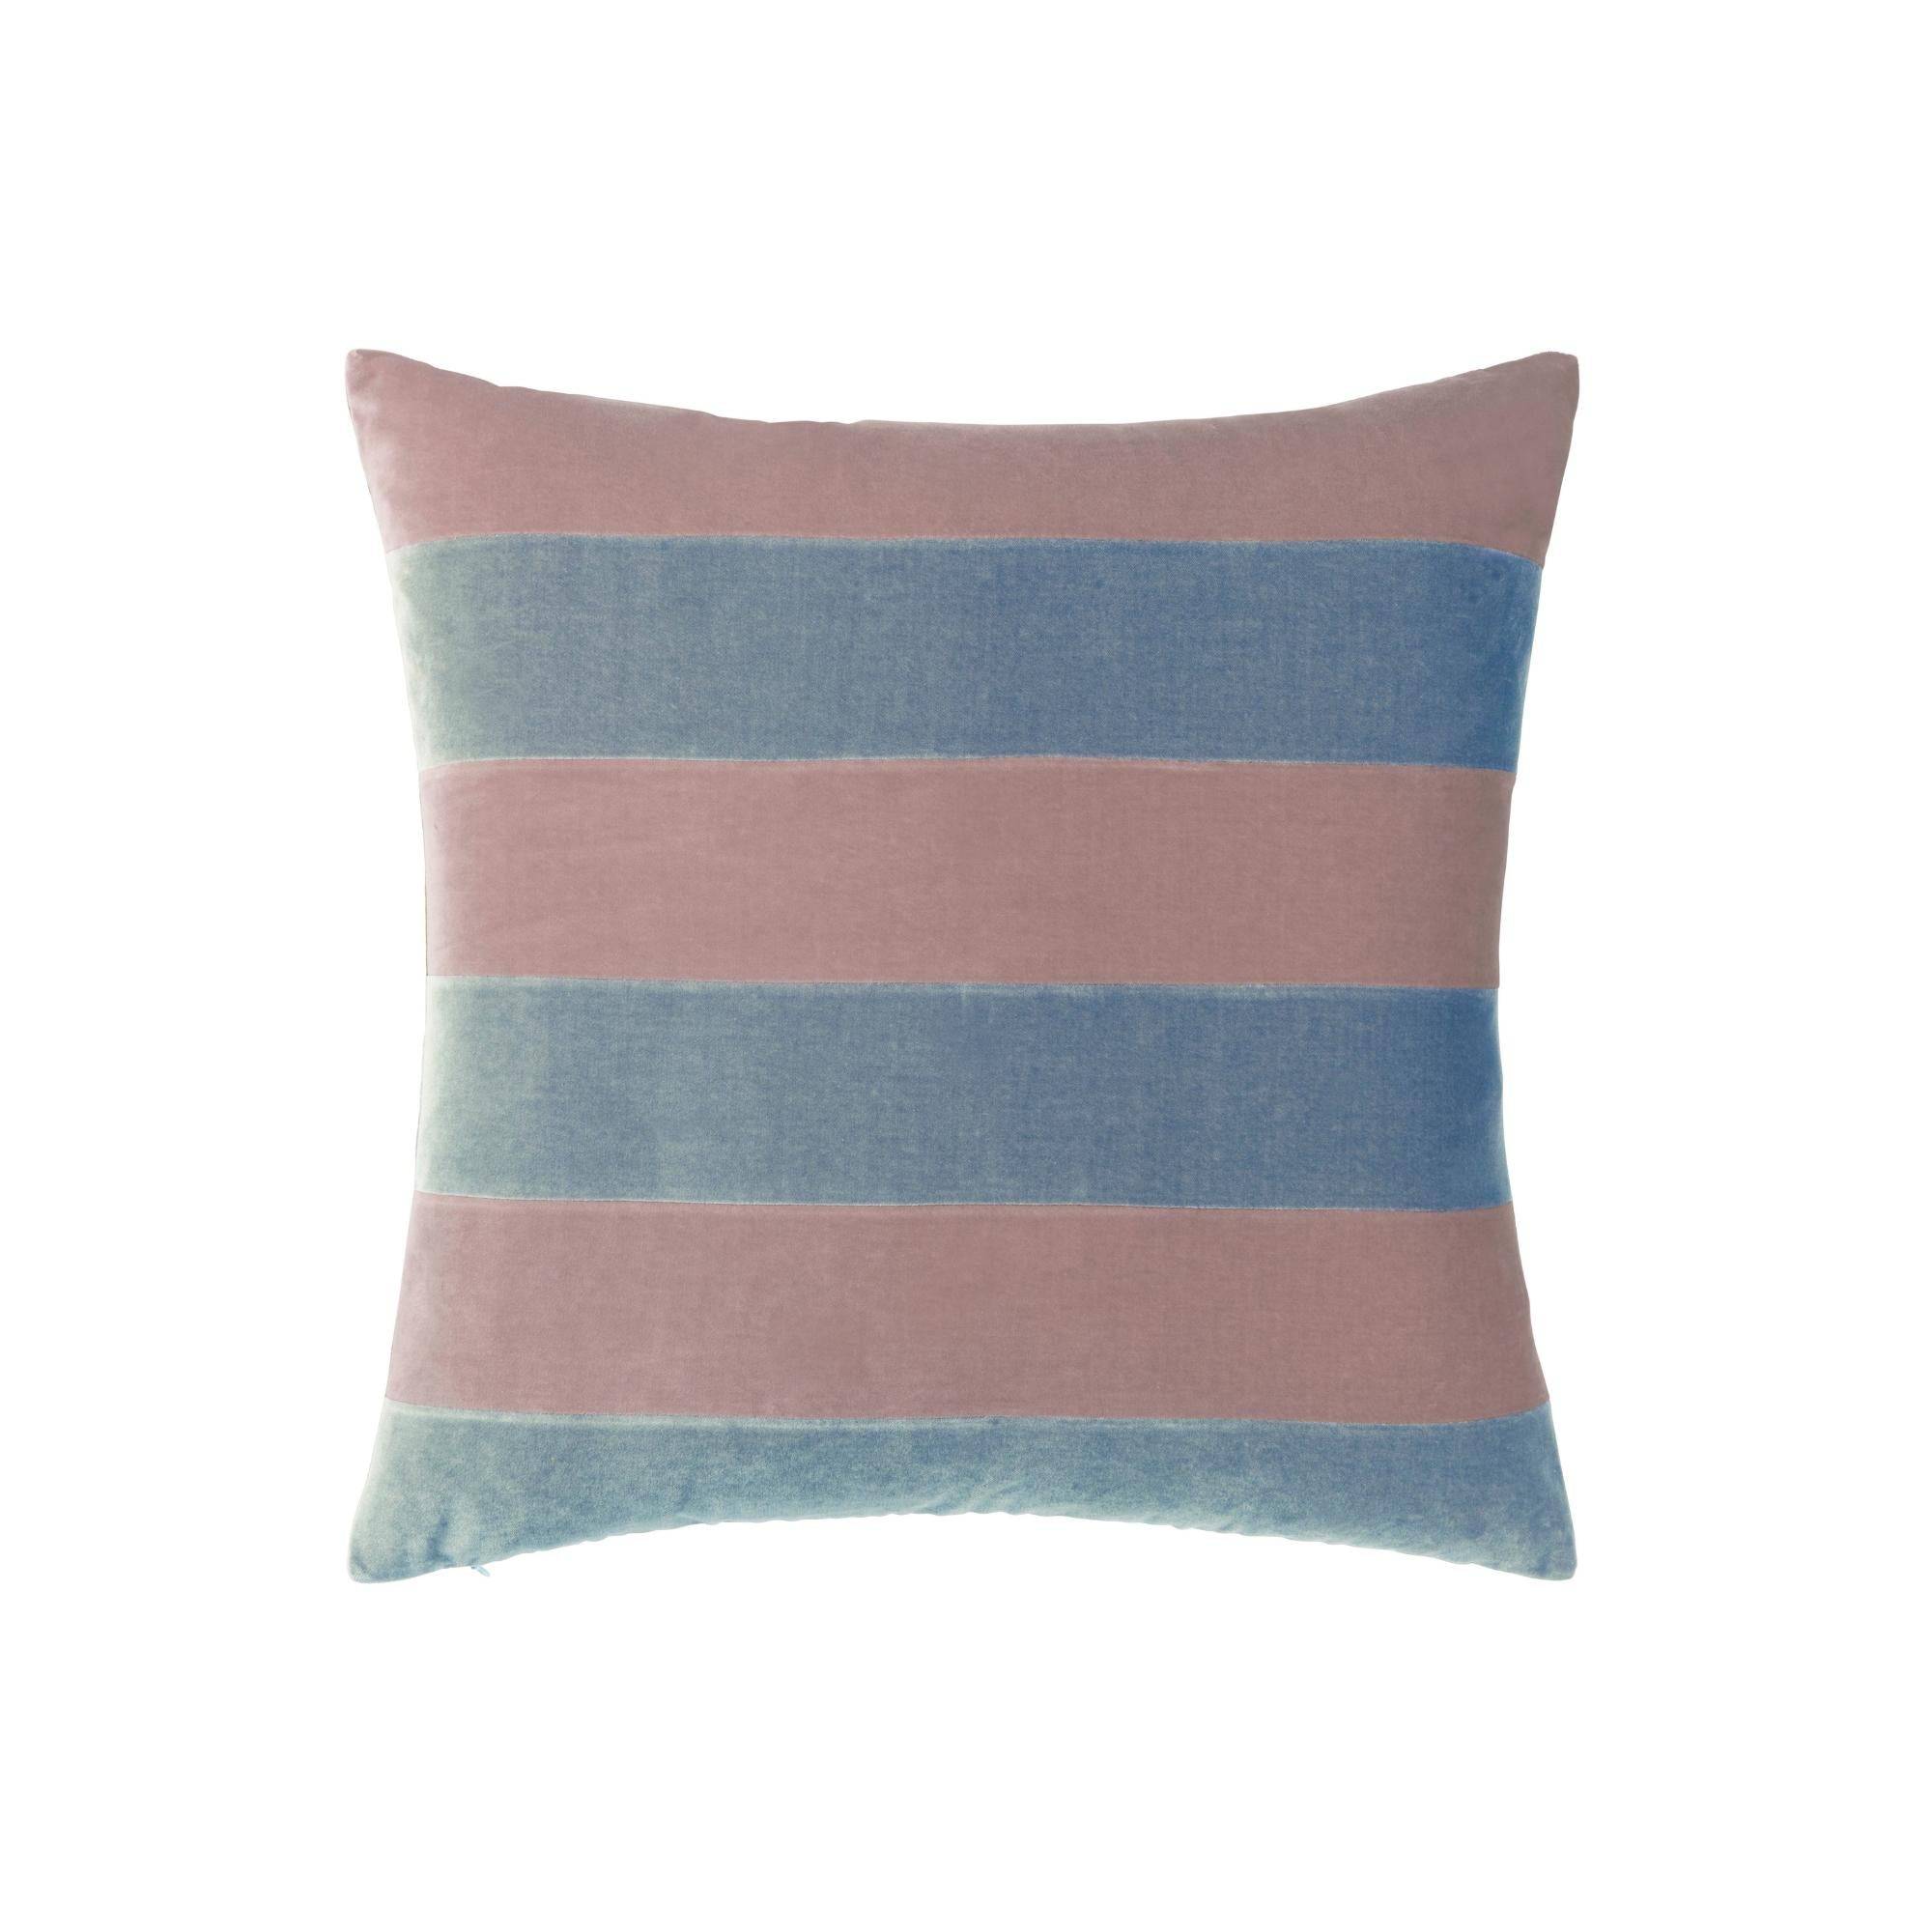 Stripe Cushion - Old Rose & Blue Dust